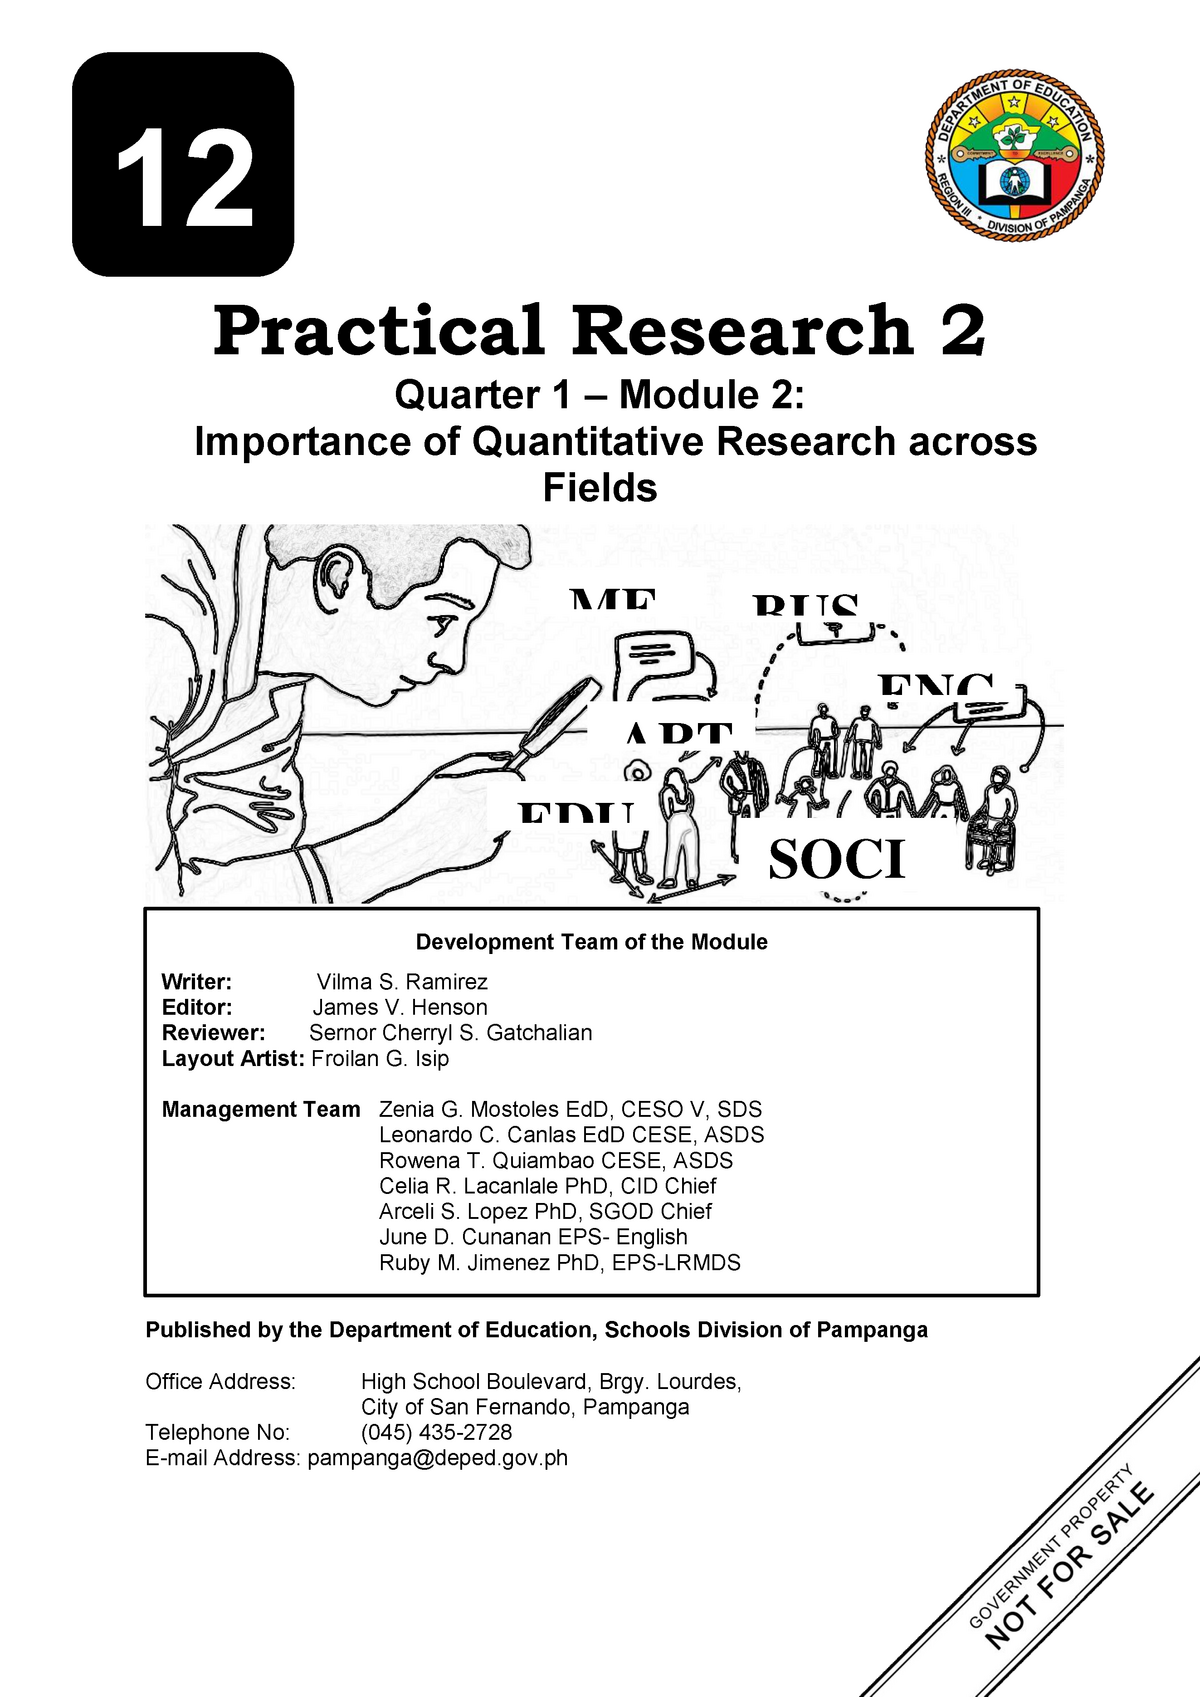 quantitative research chapters 1 5